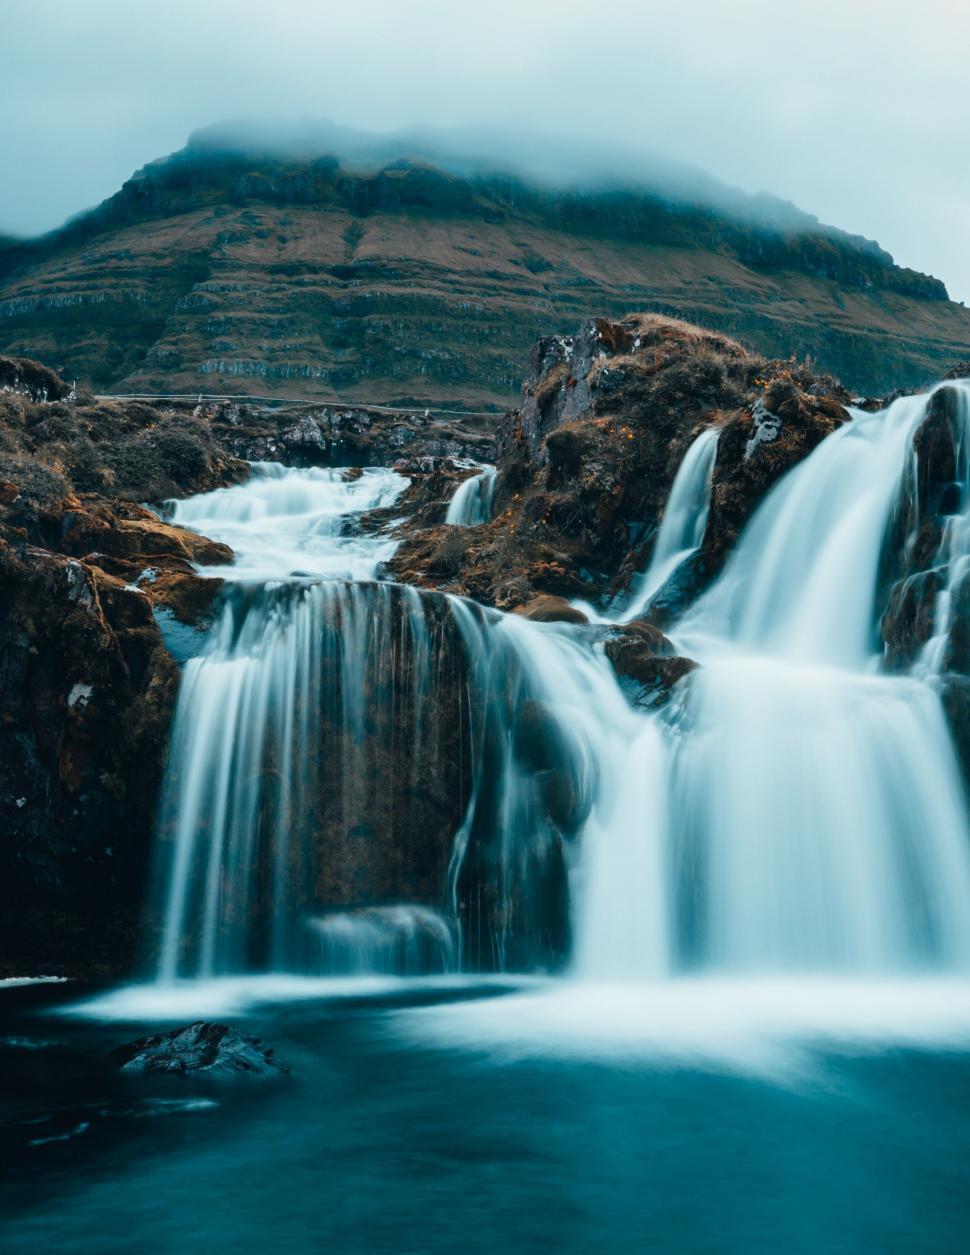 Free Image of Majestic waterfall in a misty landscape 